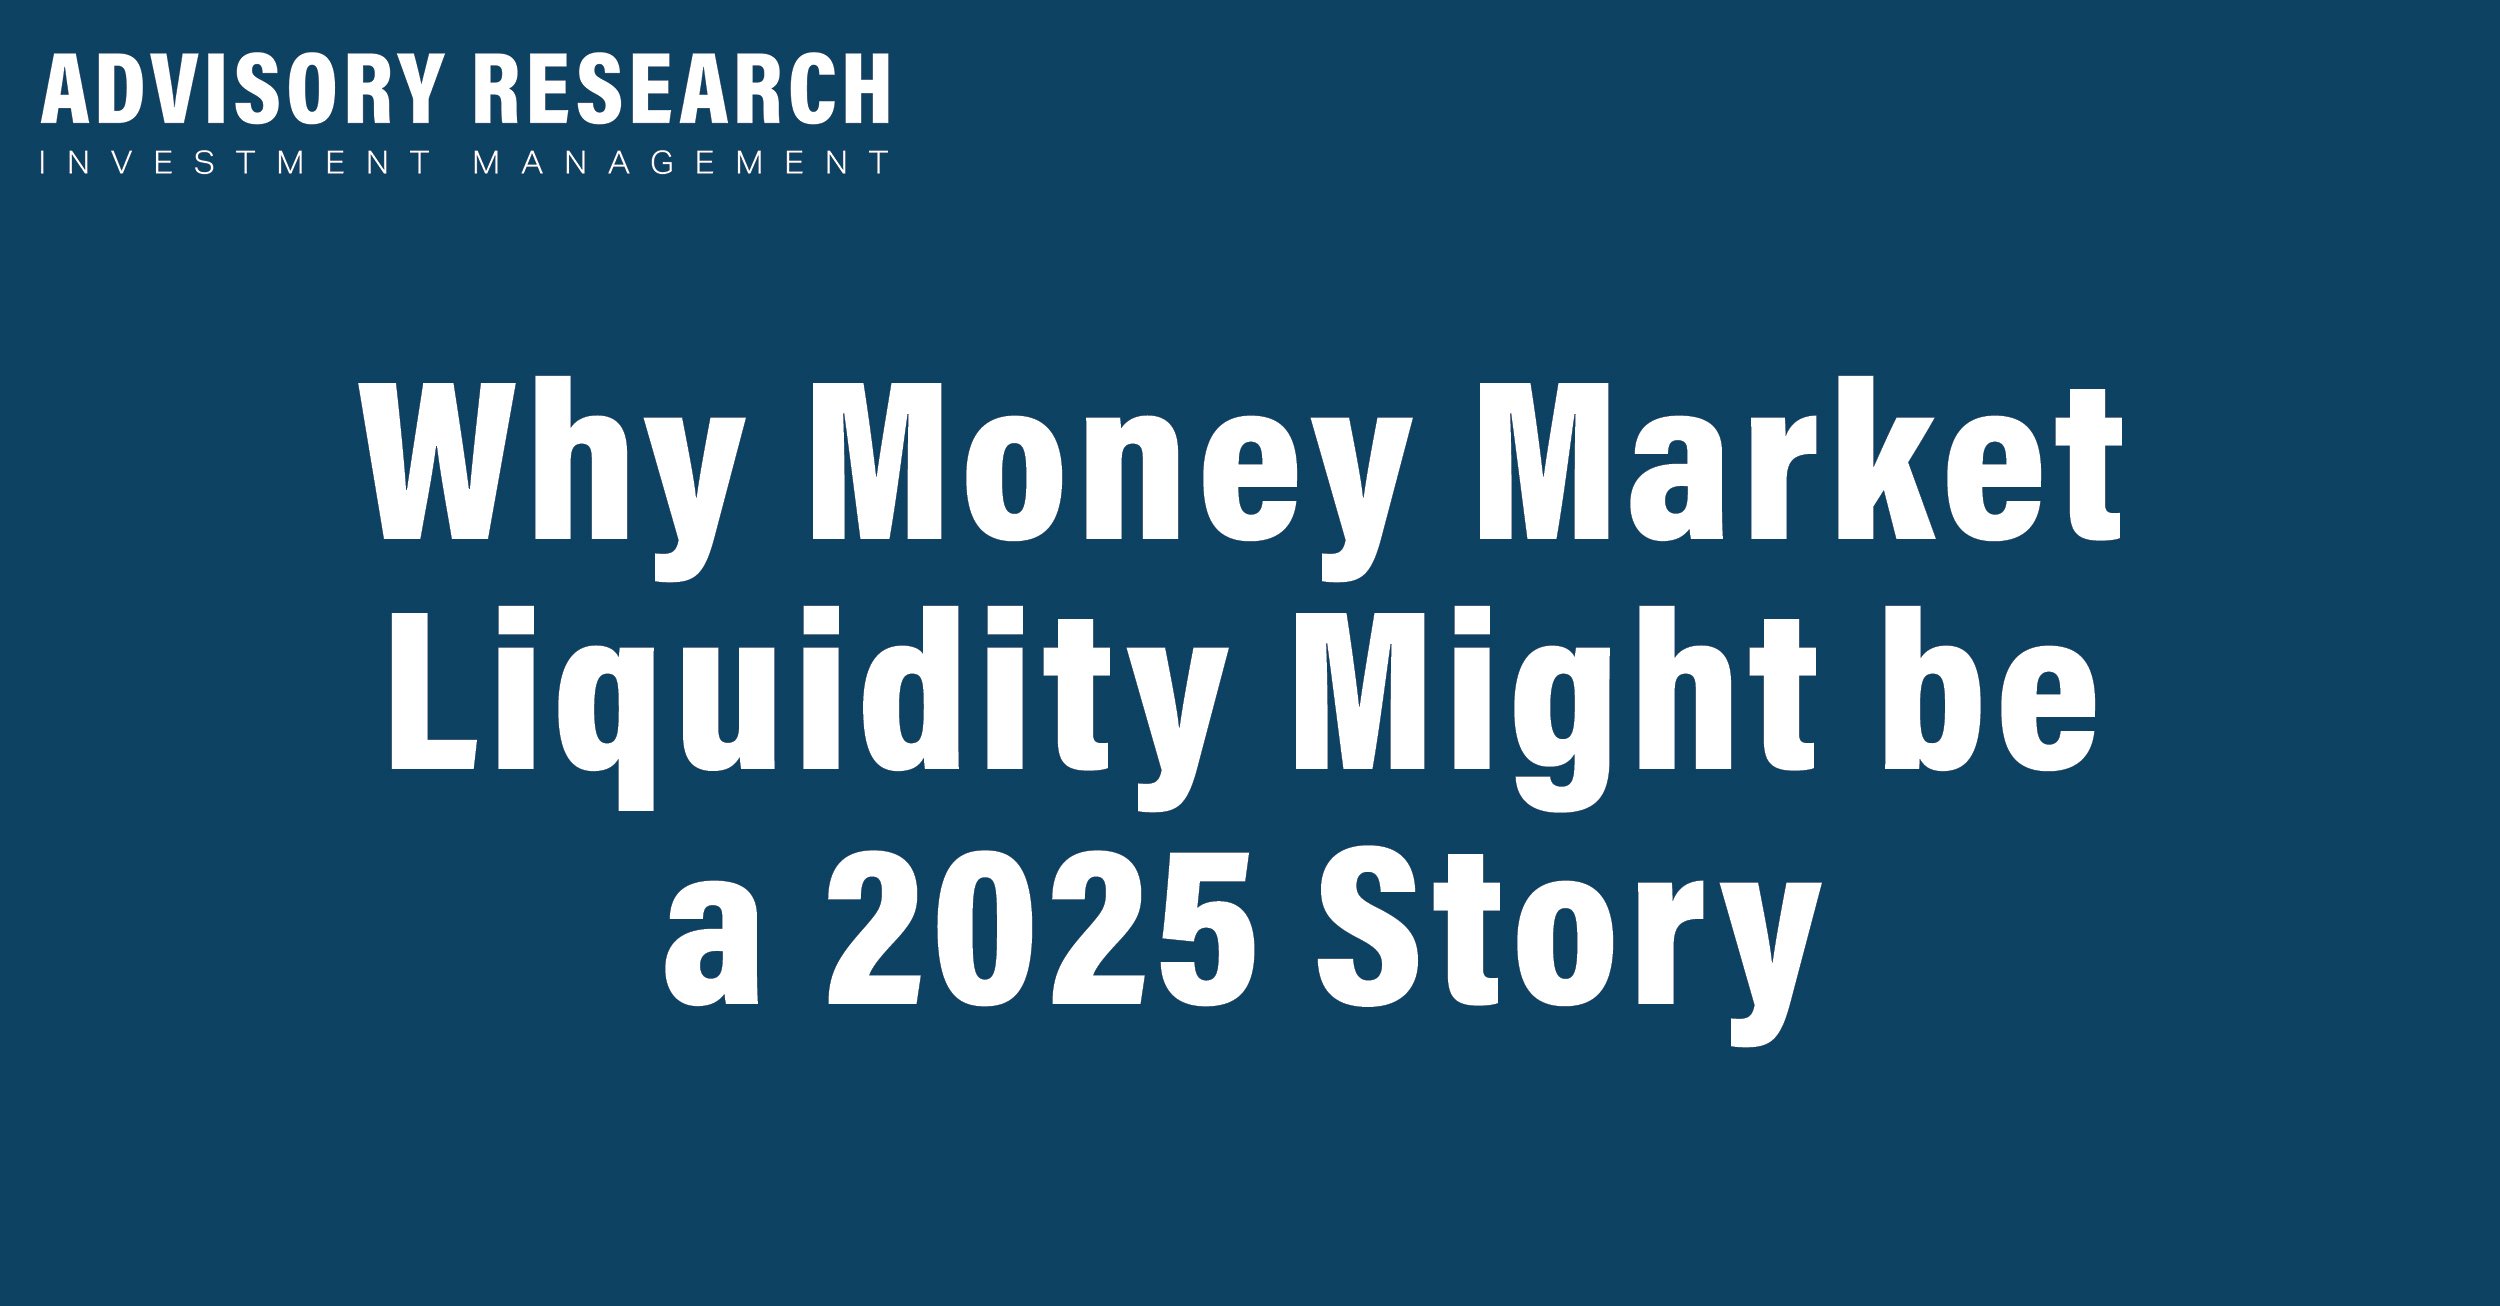 Why Money Market Liquidity Might be a 2025 Story